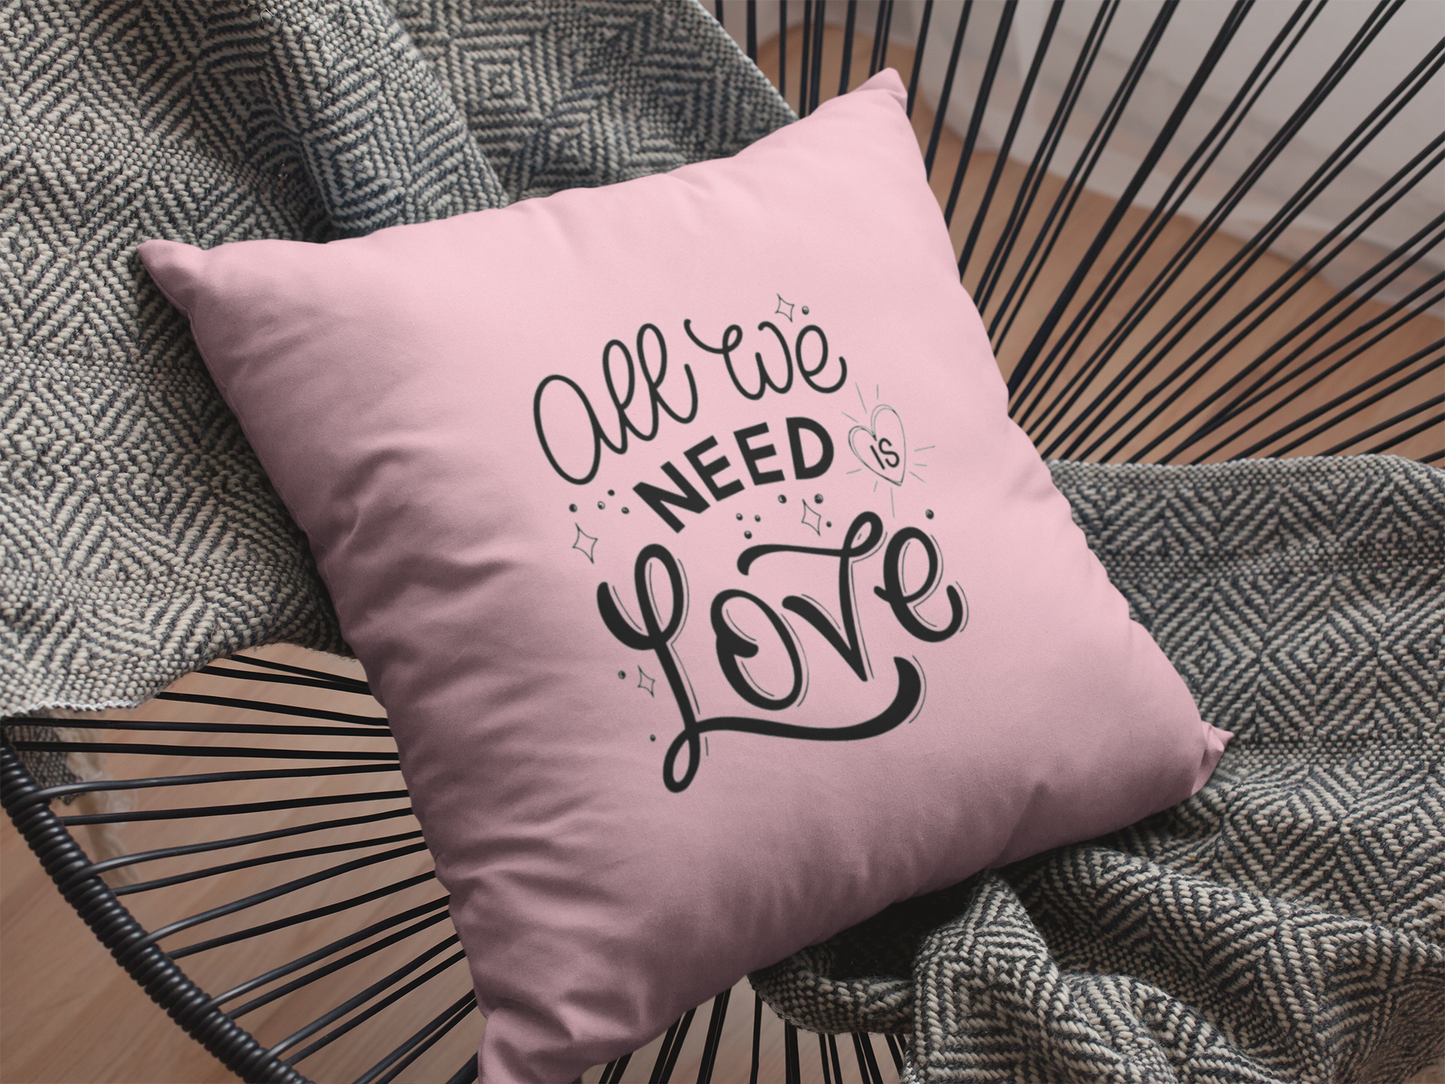 All We Need Love   Printed Cushion